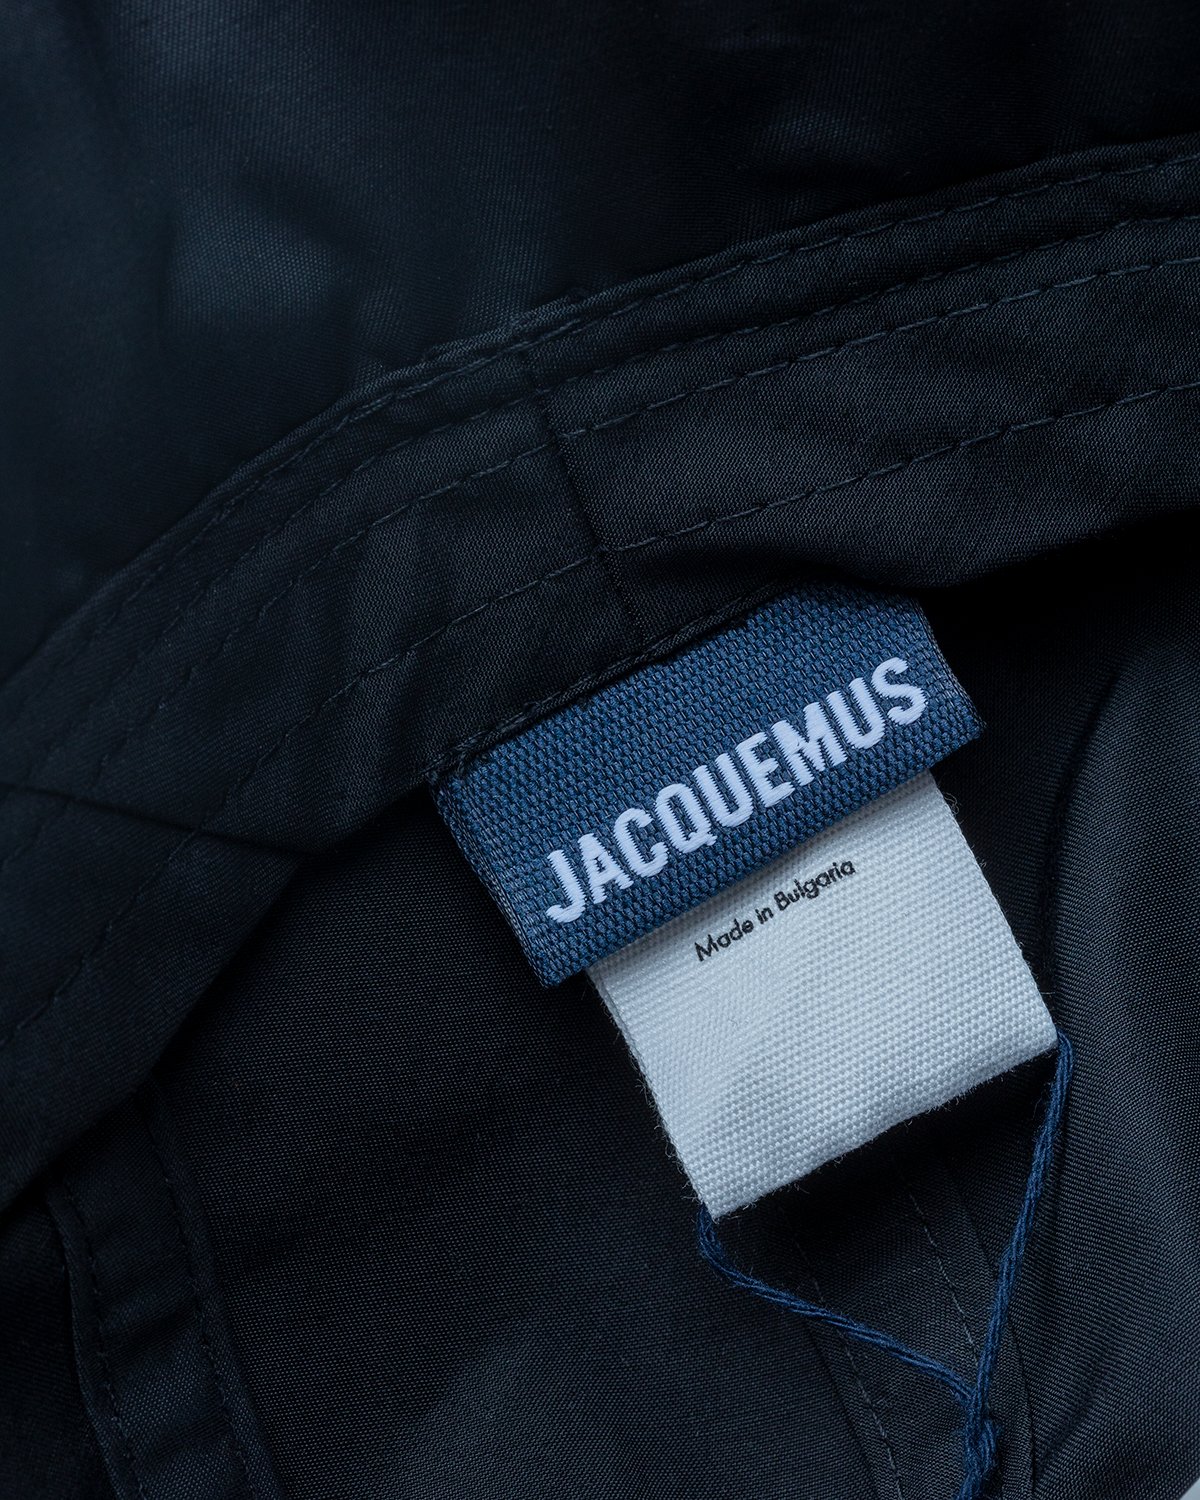 JACQUEMUS - La Casquette Cagoule Black - Accessories - Black - Image 5